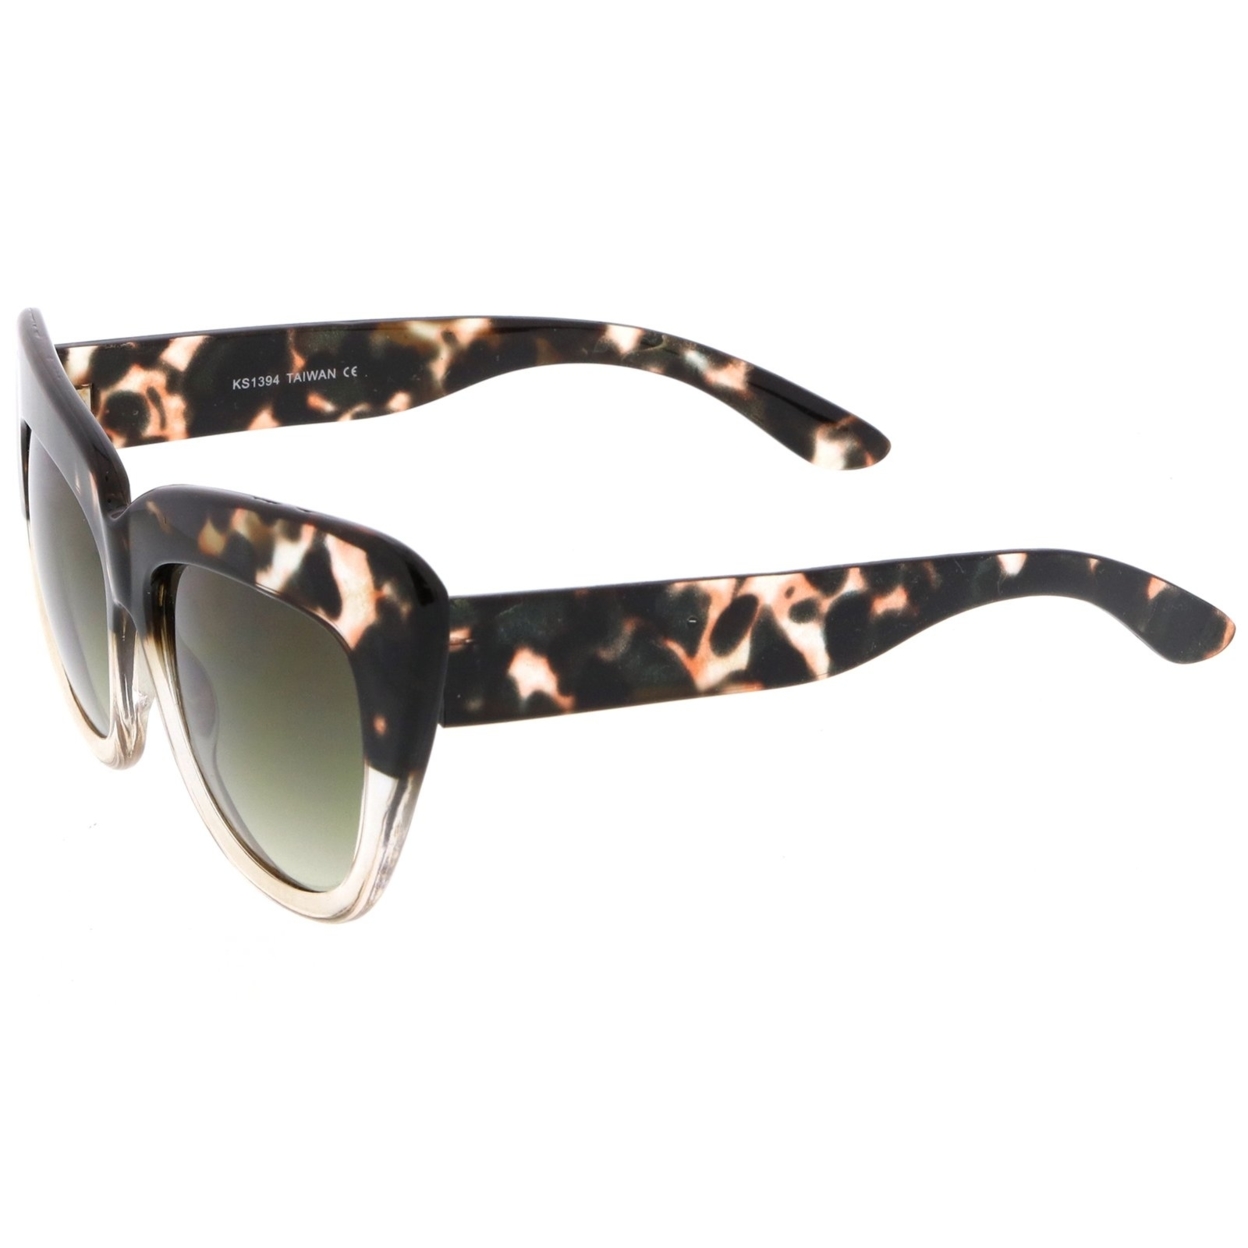 Oversize Printed Frame Wide Temple Square Lens Cat Eye Sunglasses 55mm - Black-Tortoise-Fade / Lavender